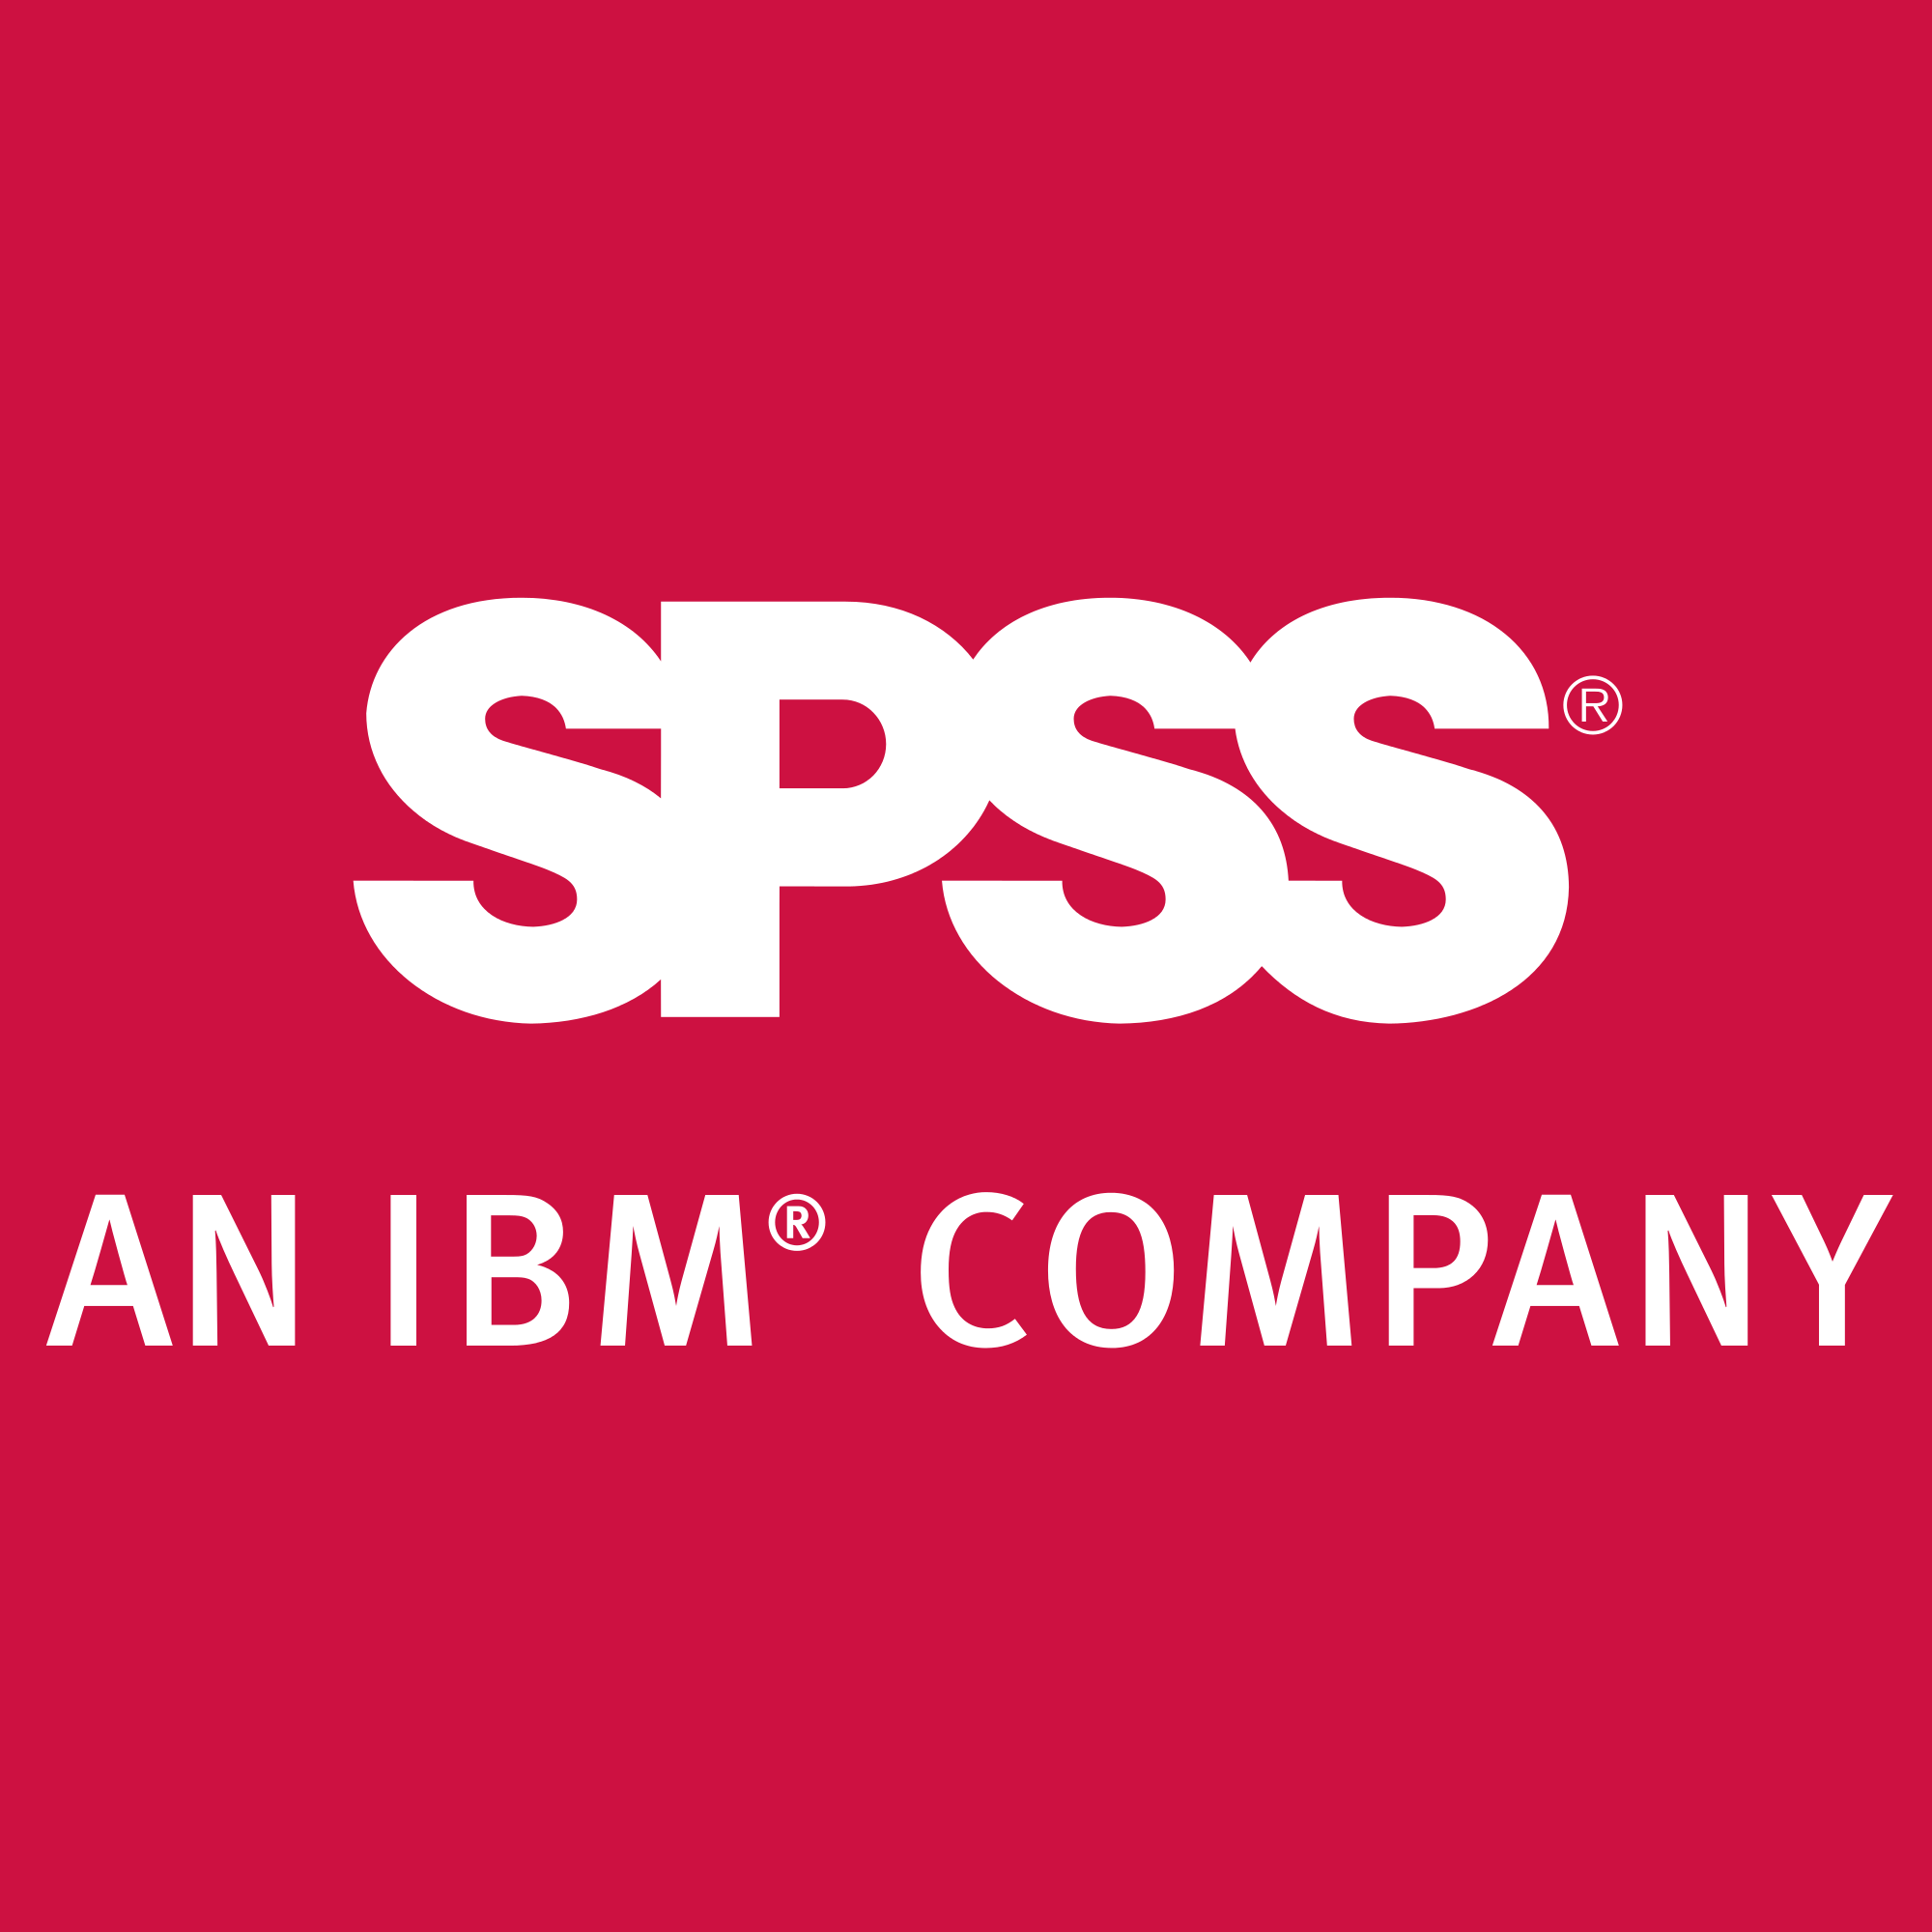 IBM Company Logo - File:SPSS An IBM Company logo.svg - Wikimedia Commons